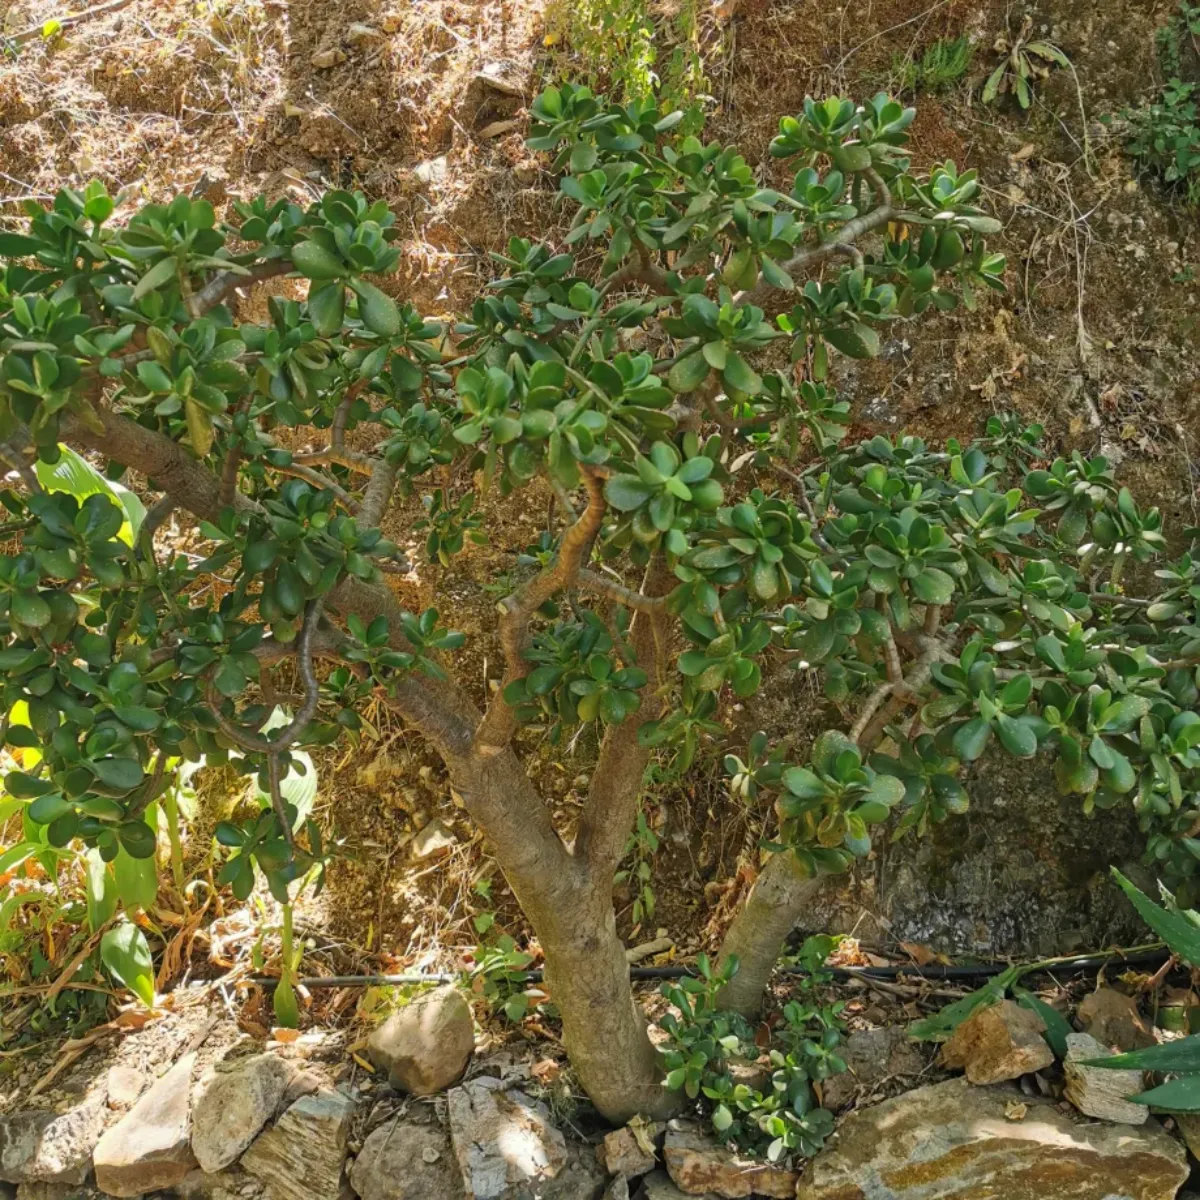  arbre de jade planté dans de la terre